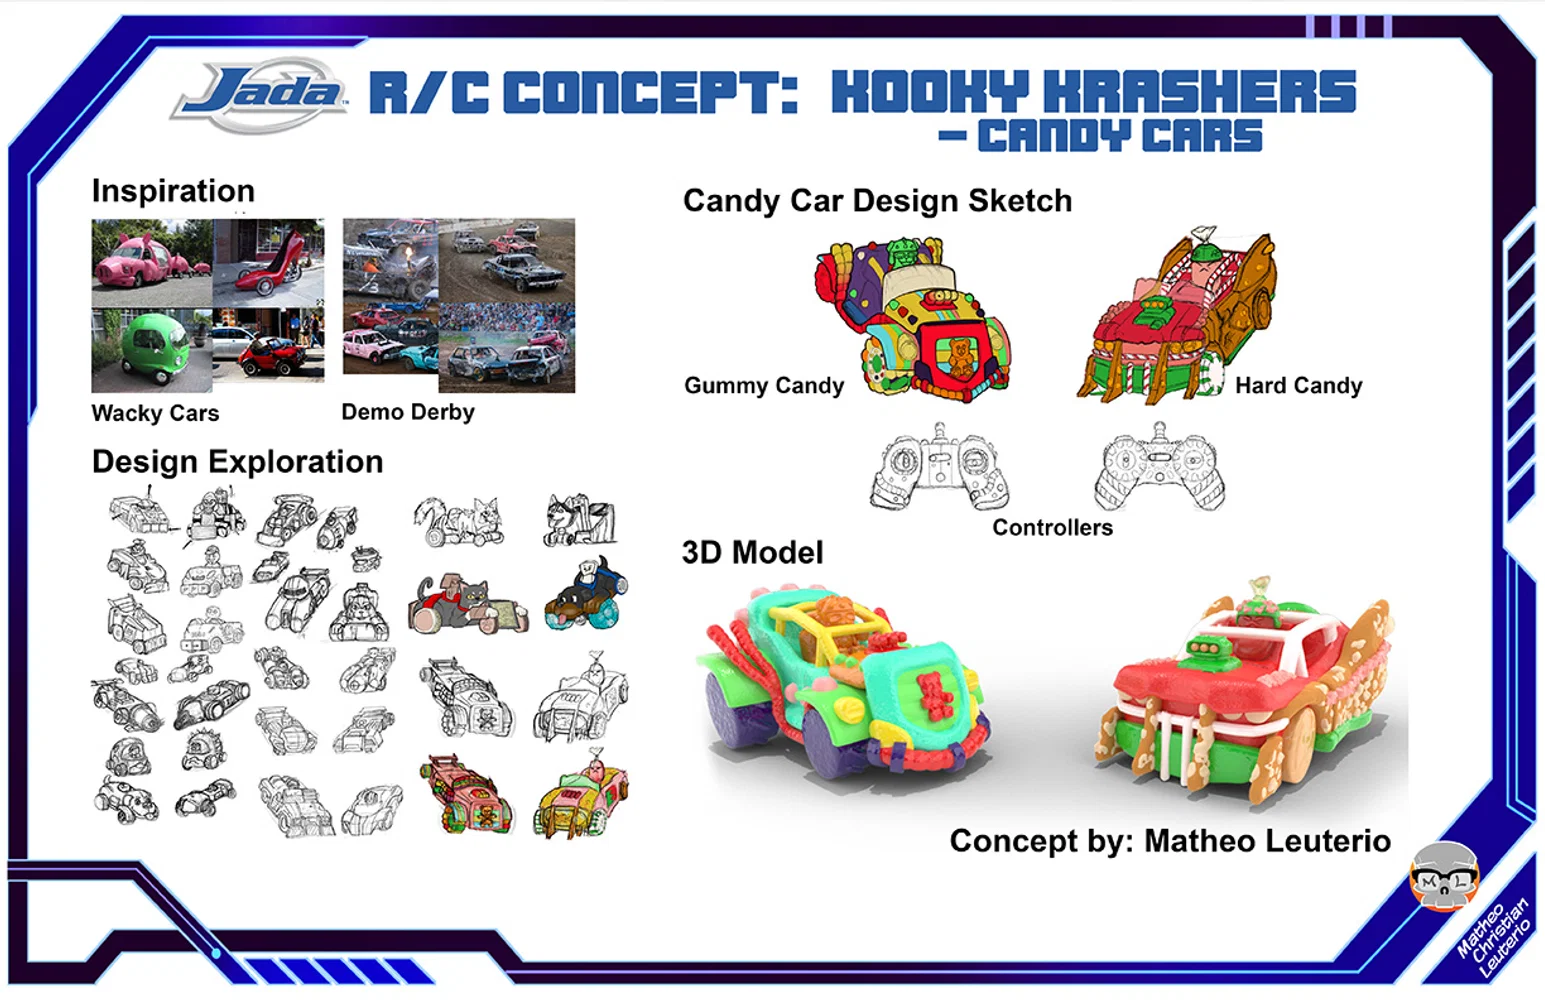 Jada Toys R/C Vehicle Project